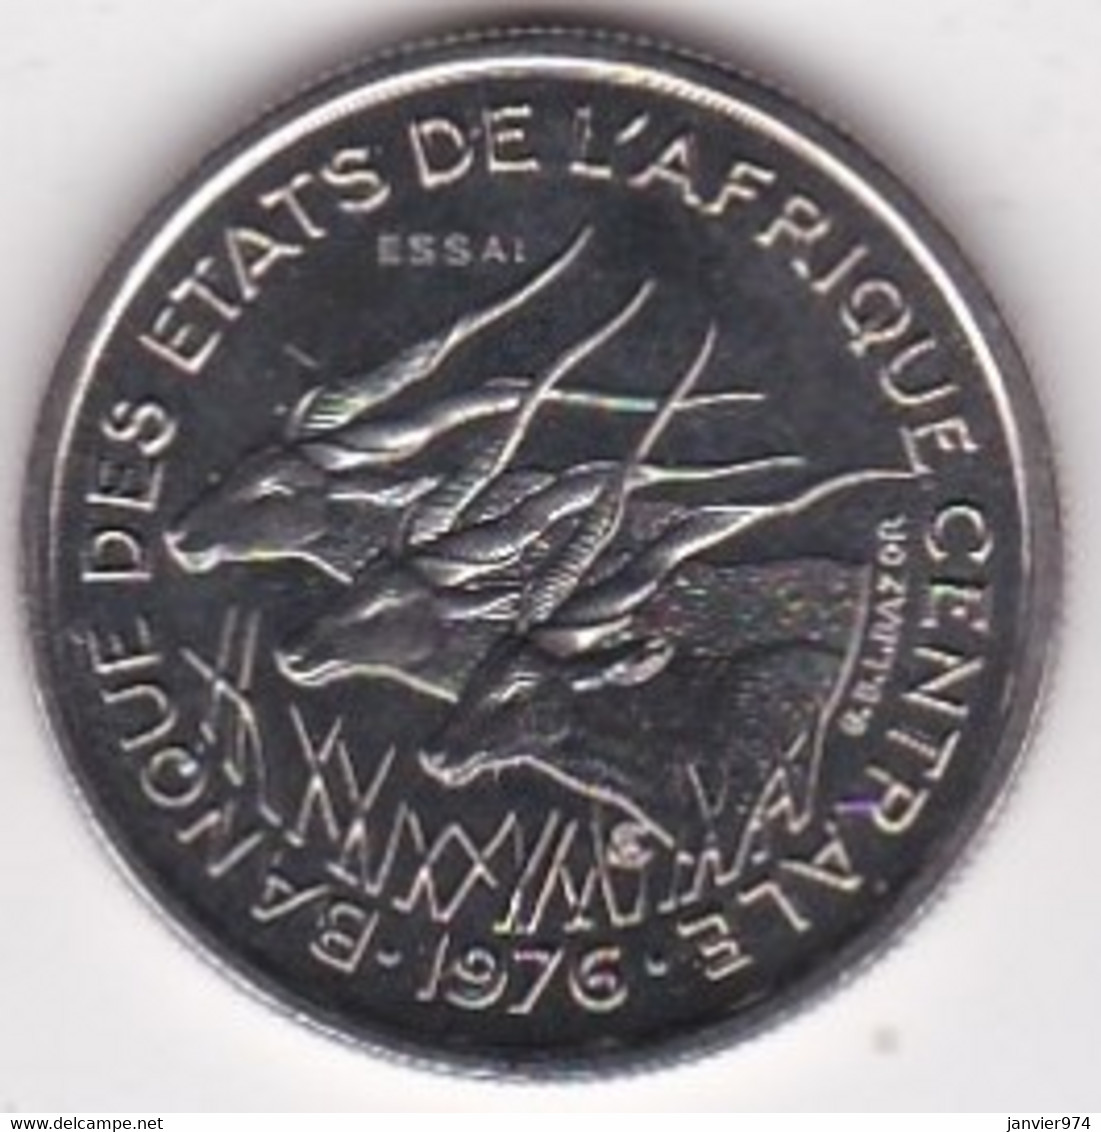 Republique Centrafricaine 50 Francs ESSAI 1976 B. Bronze Aluminium. KM# E 8 - Centraal-Afrikaanse Republiek